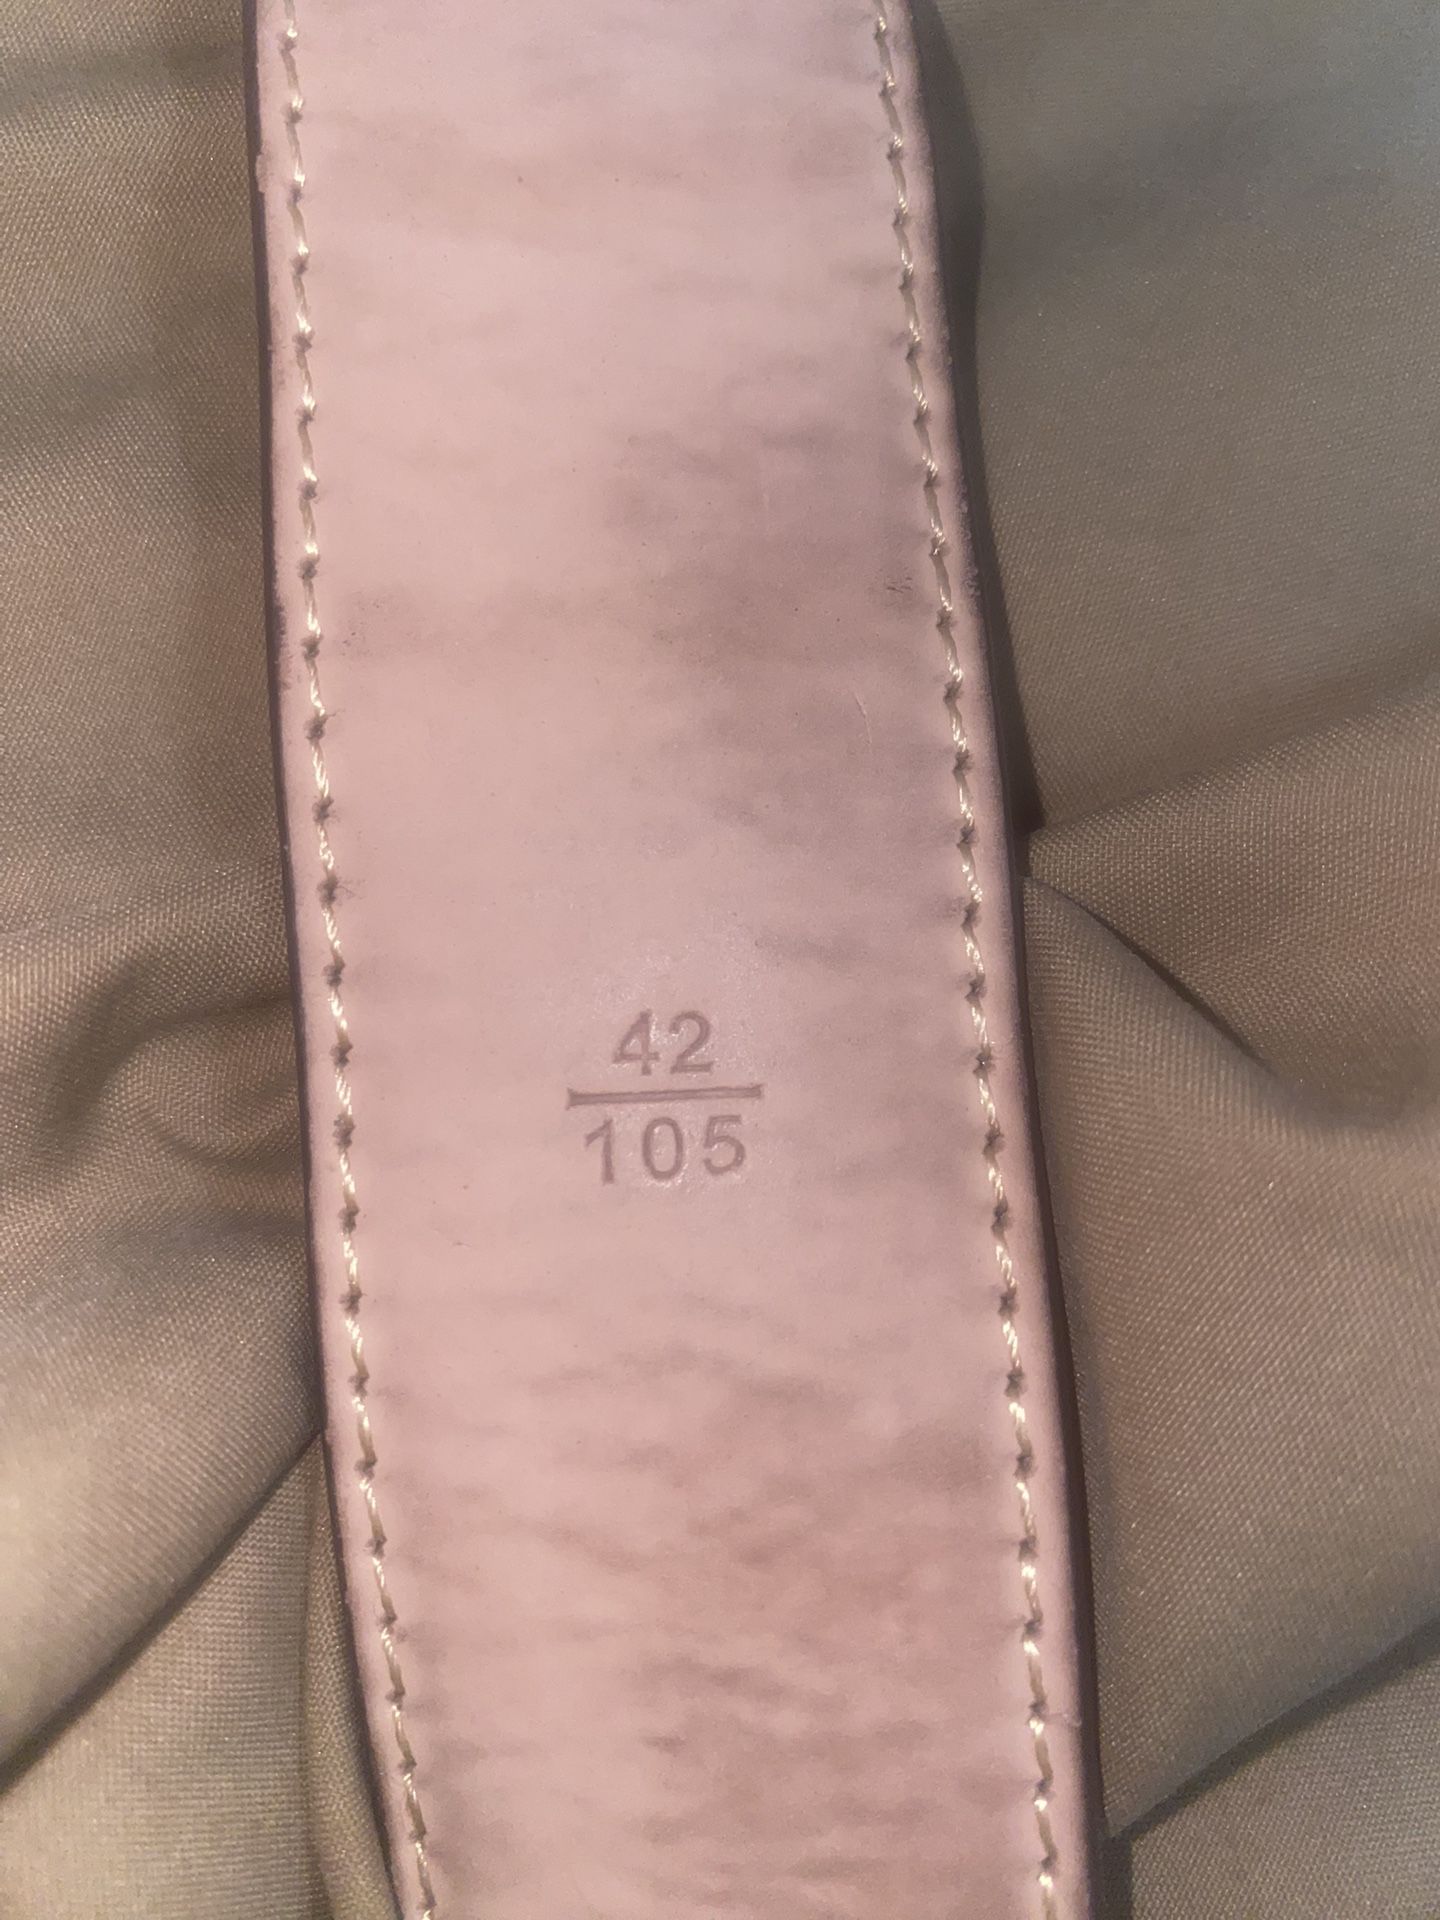 Black Louis Vuitton Belt for Sale in Queen Creek, AZ - OfferUp